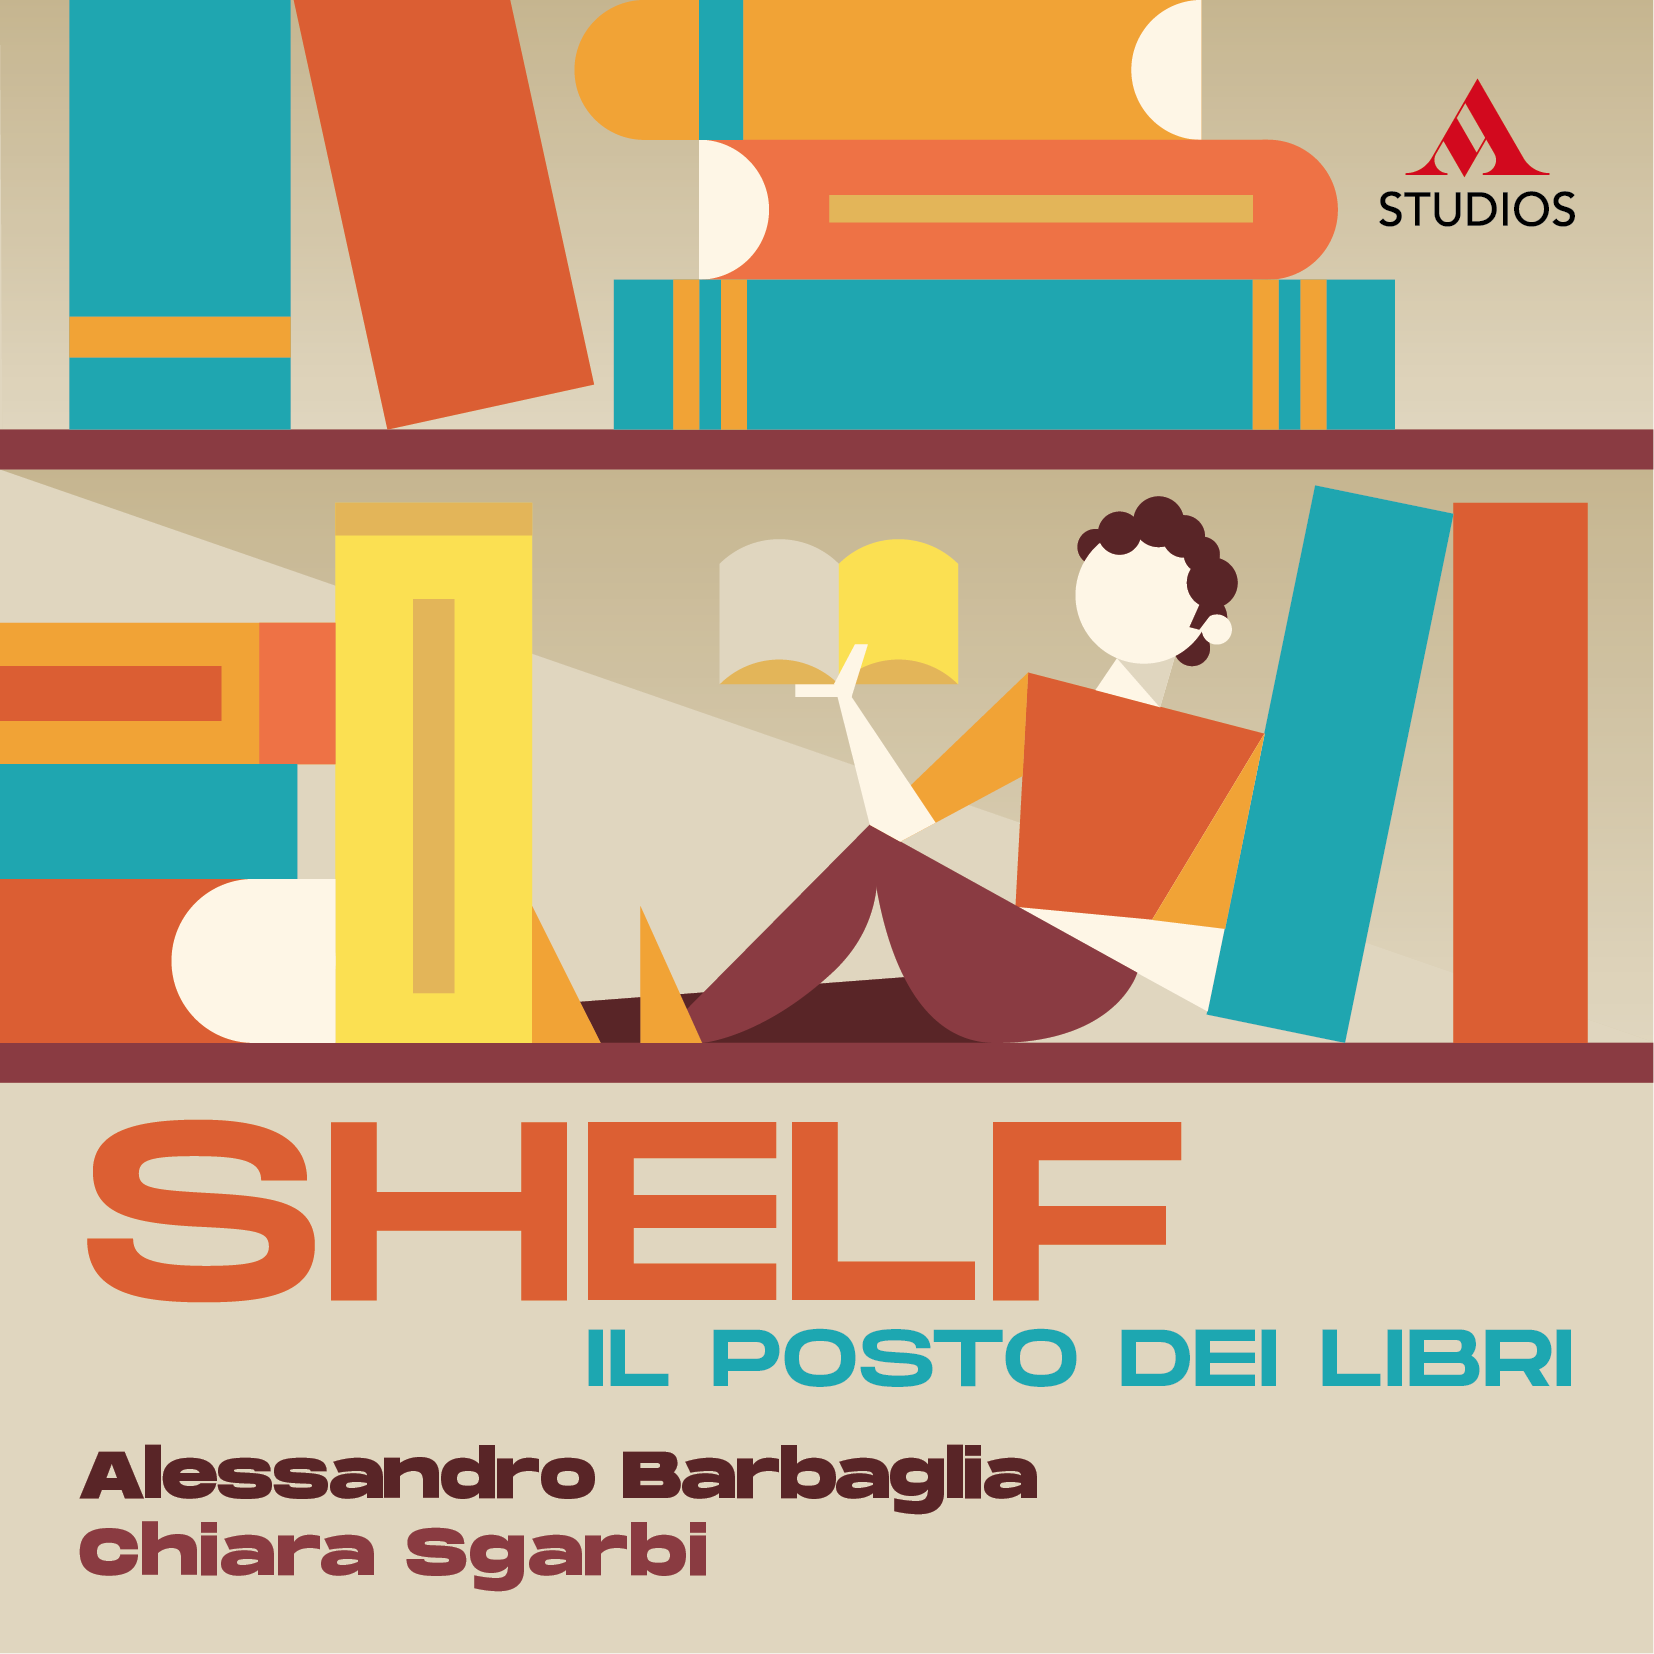 Mondadori Studios lancia la serie podcast “Shelf. il posto dei libri”